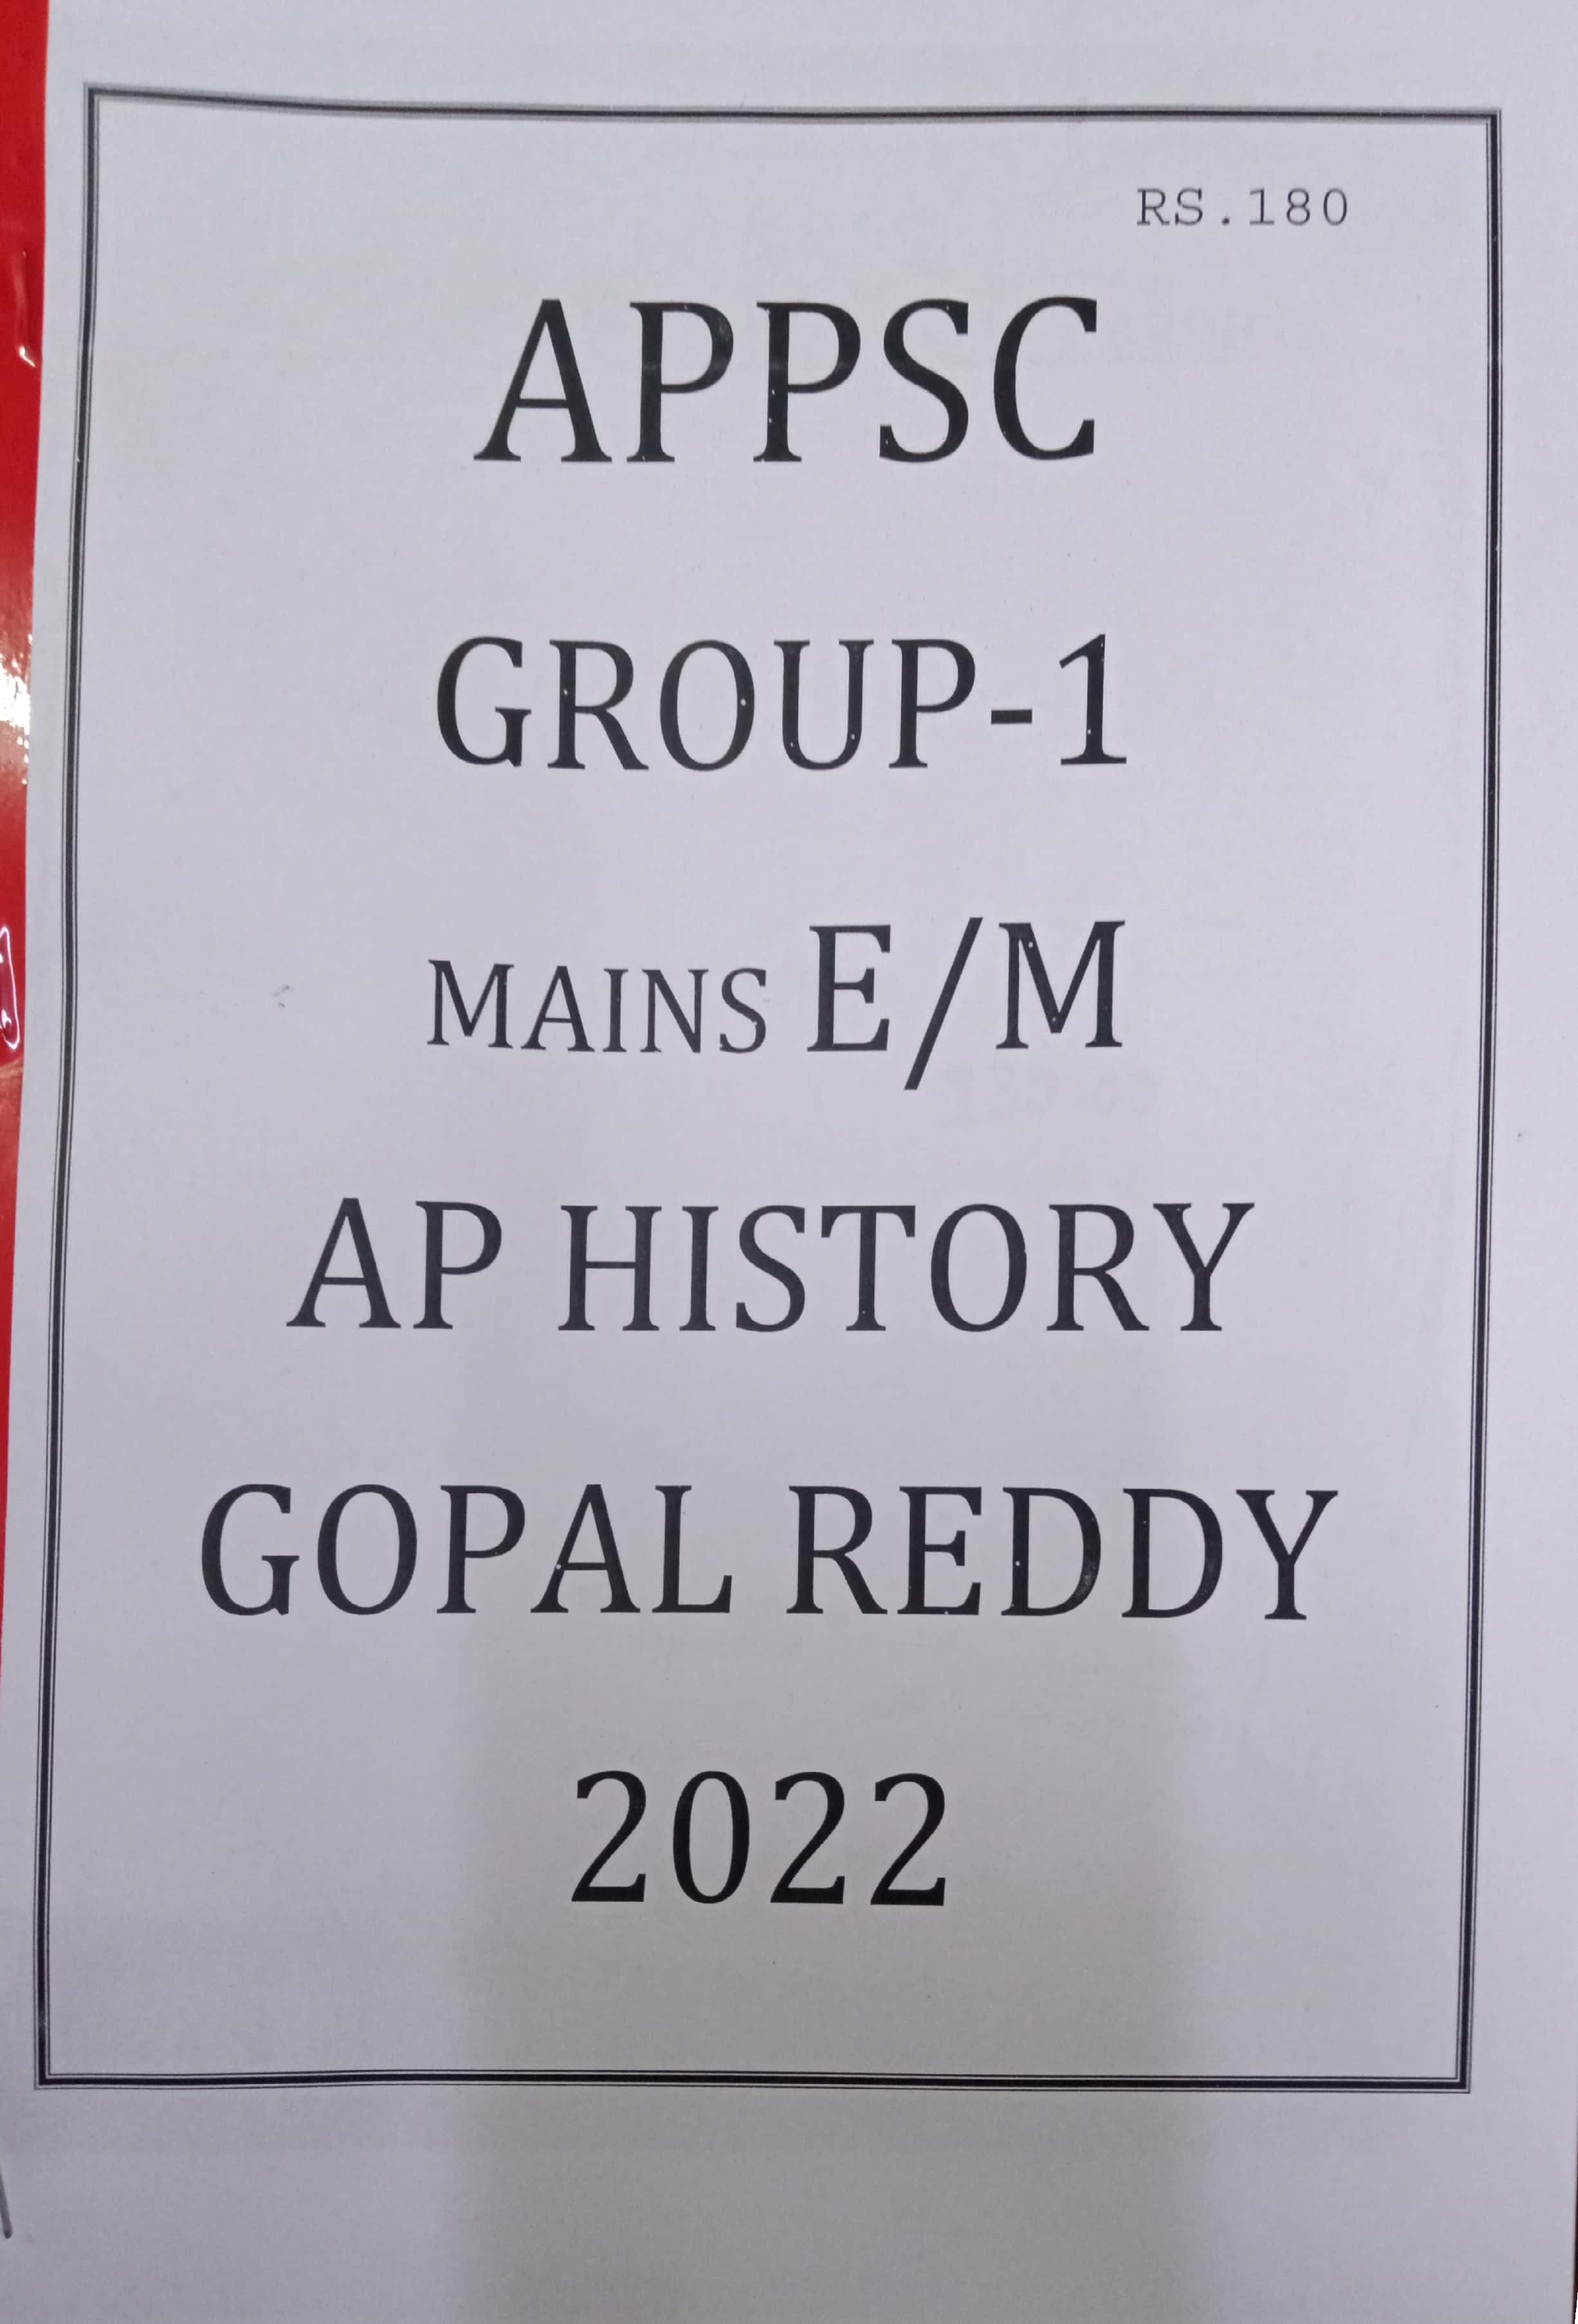 APPSC G-1 MAINS AP HISTORY CLASS NOTES [ENGLISH MEDIUM] GOPAL REDDY XEROX PRINTED MATERIAL